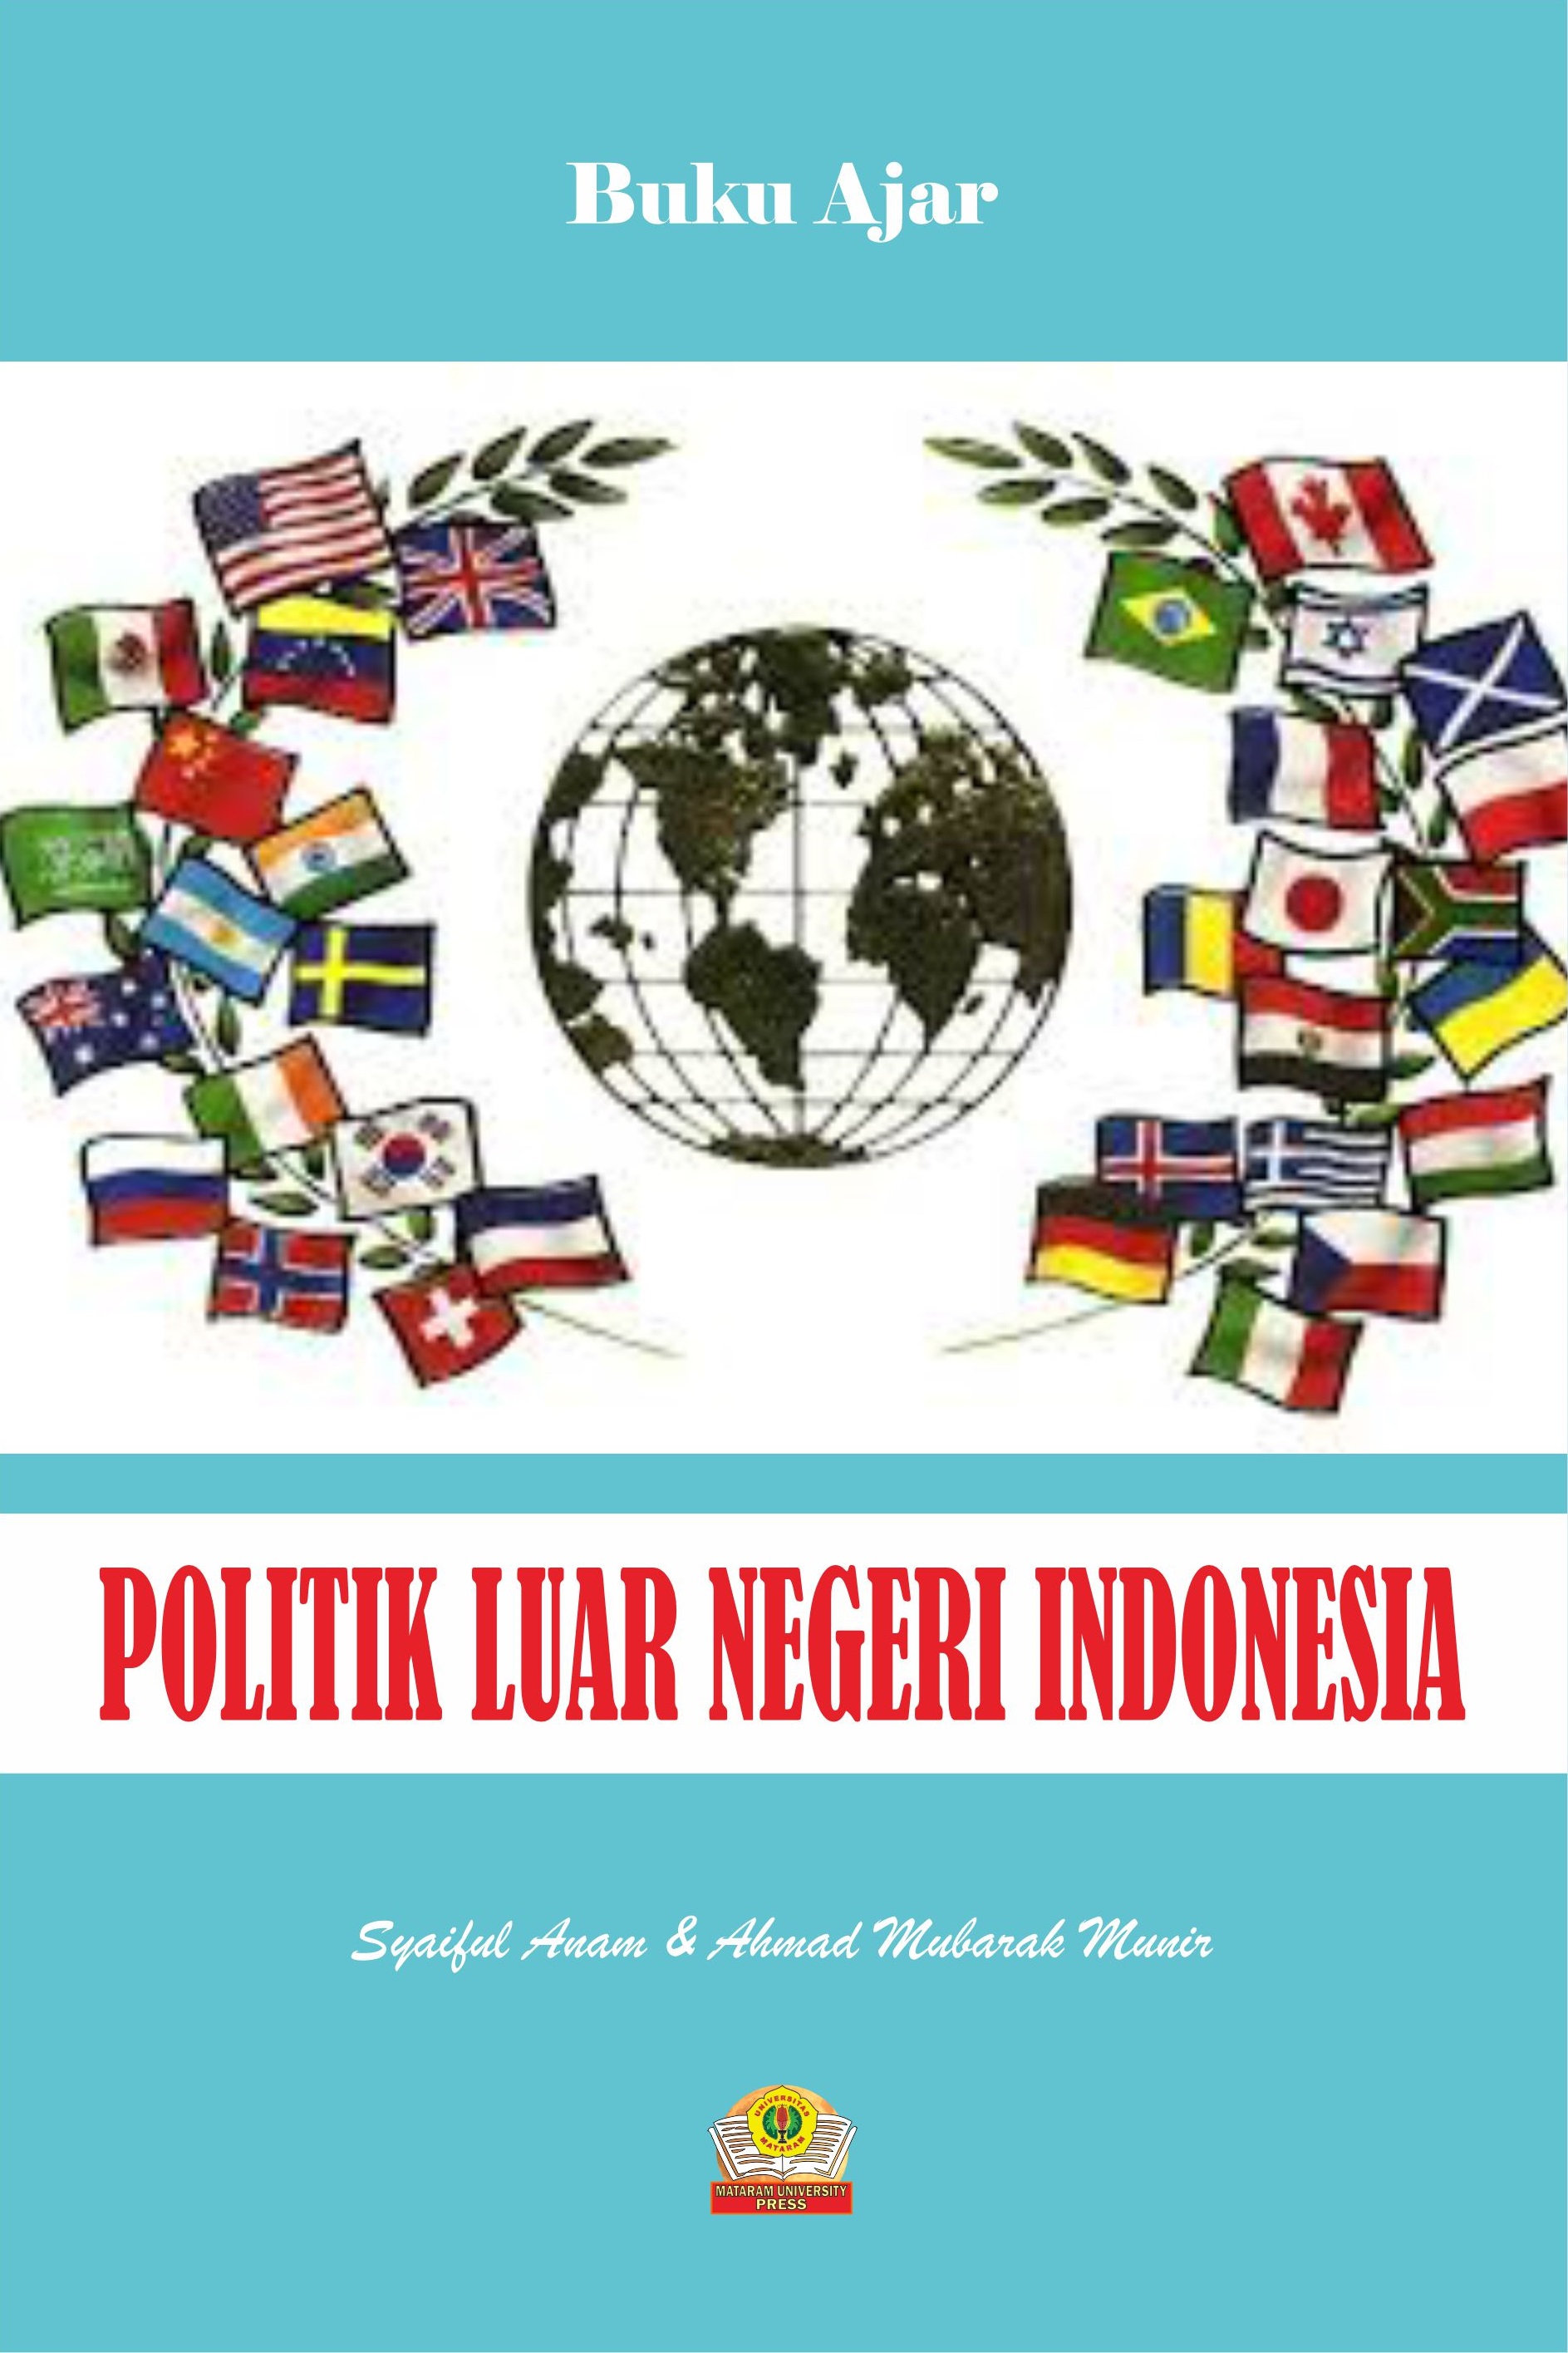 Politik Luar Negeri Indonesia Adalah newstempo